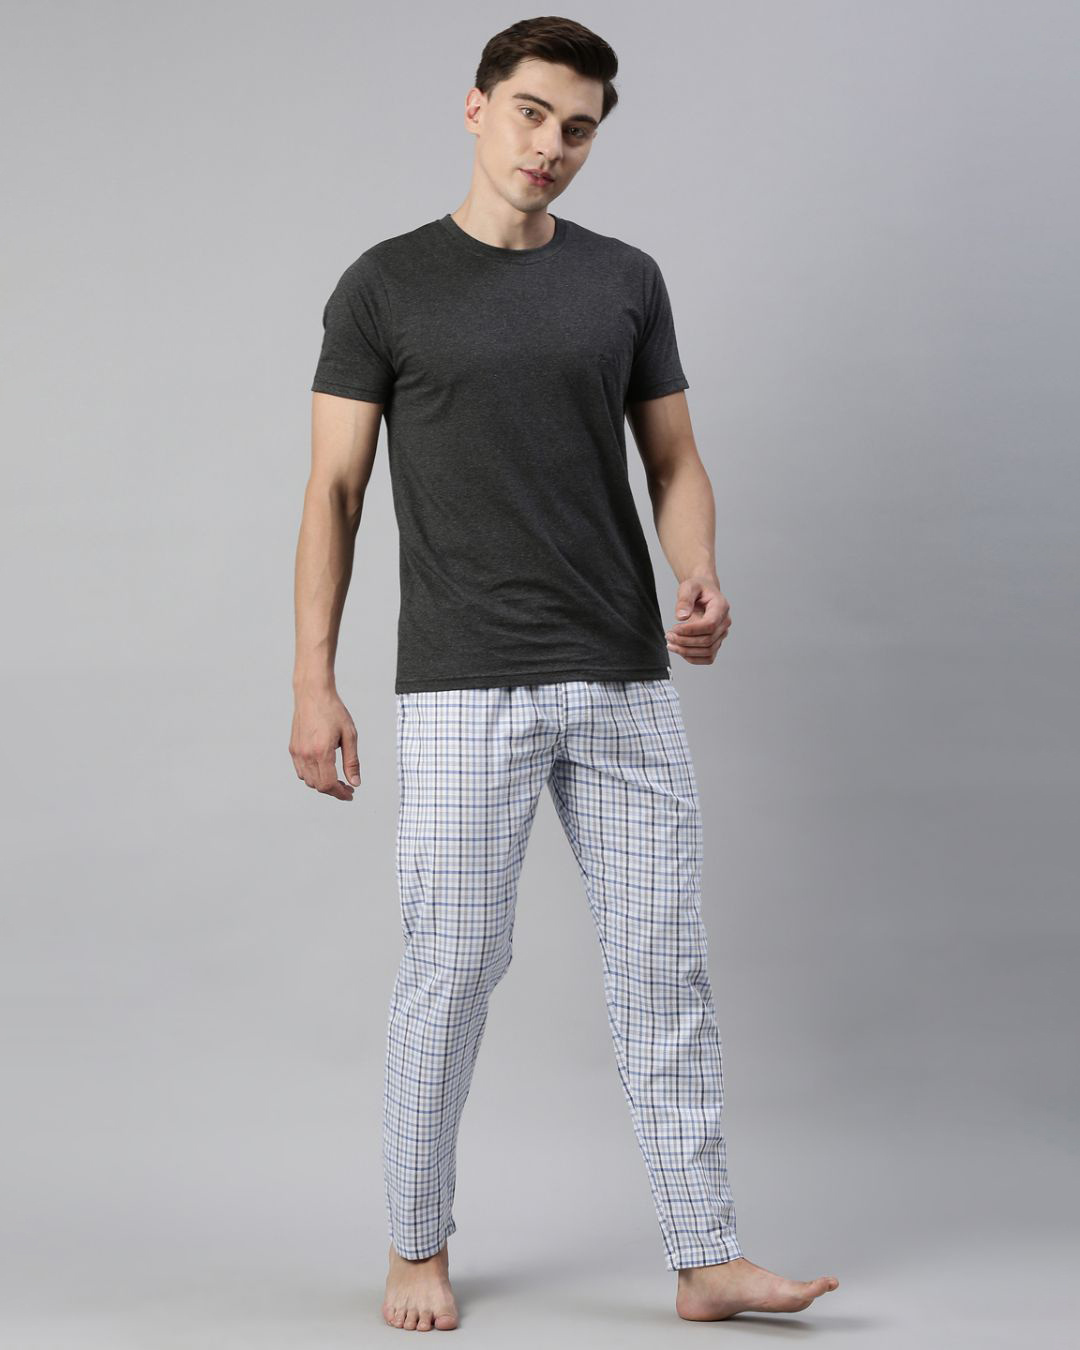 Buy Men's White & Blue Checked Cotton Pyjamas Online in India at Bewakoof